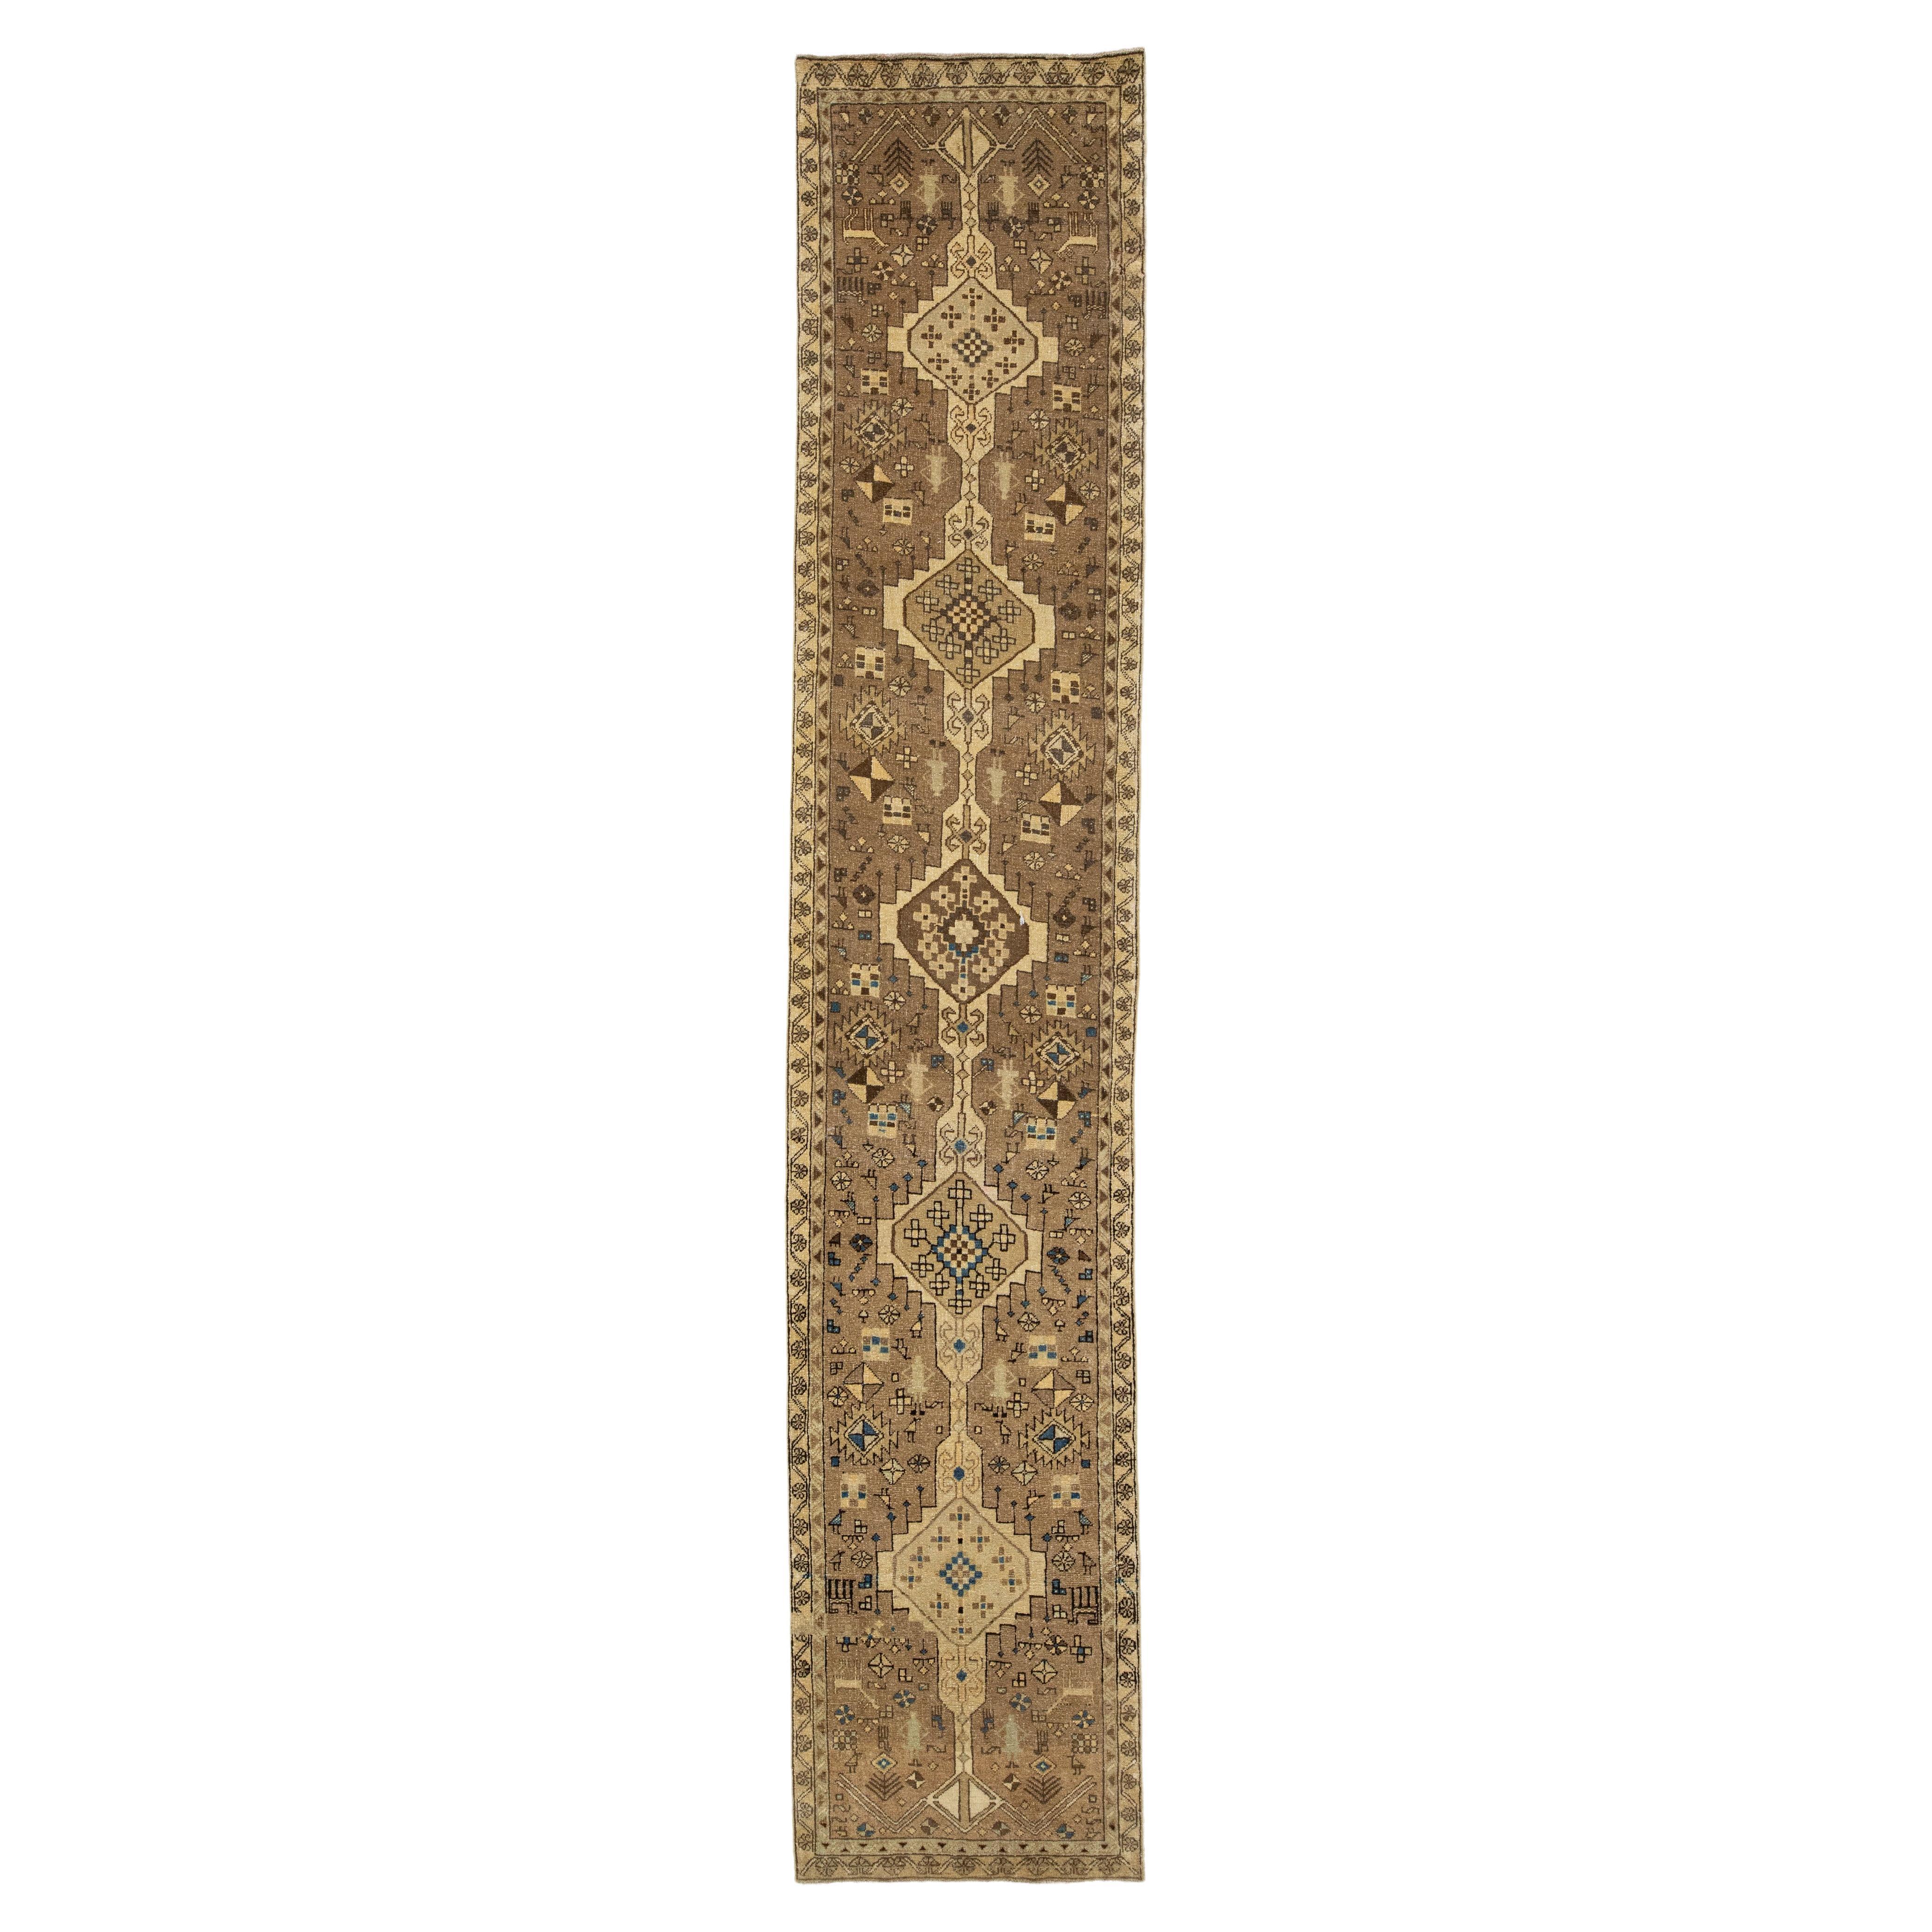 Brown Vintage Distressed Persian Wool Runner With Tribal Pattern (Chemin de table en laine persane à motif tribal)